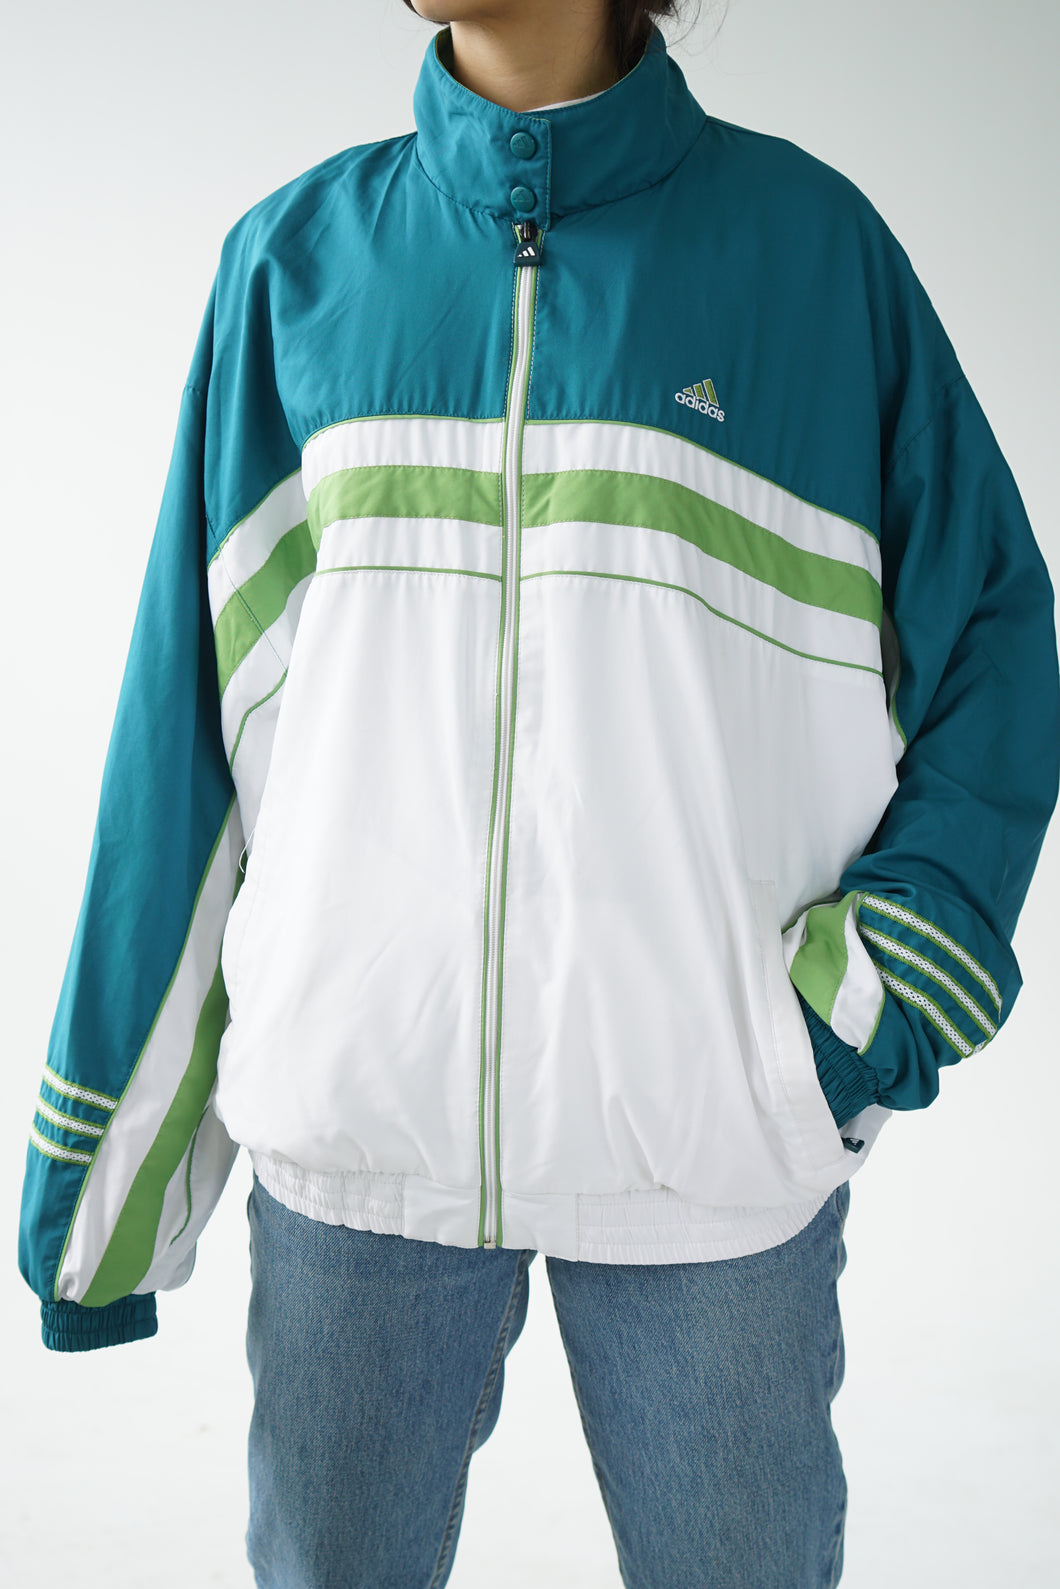 Track suit vintage Adidas blanc et vert